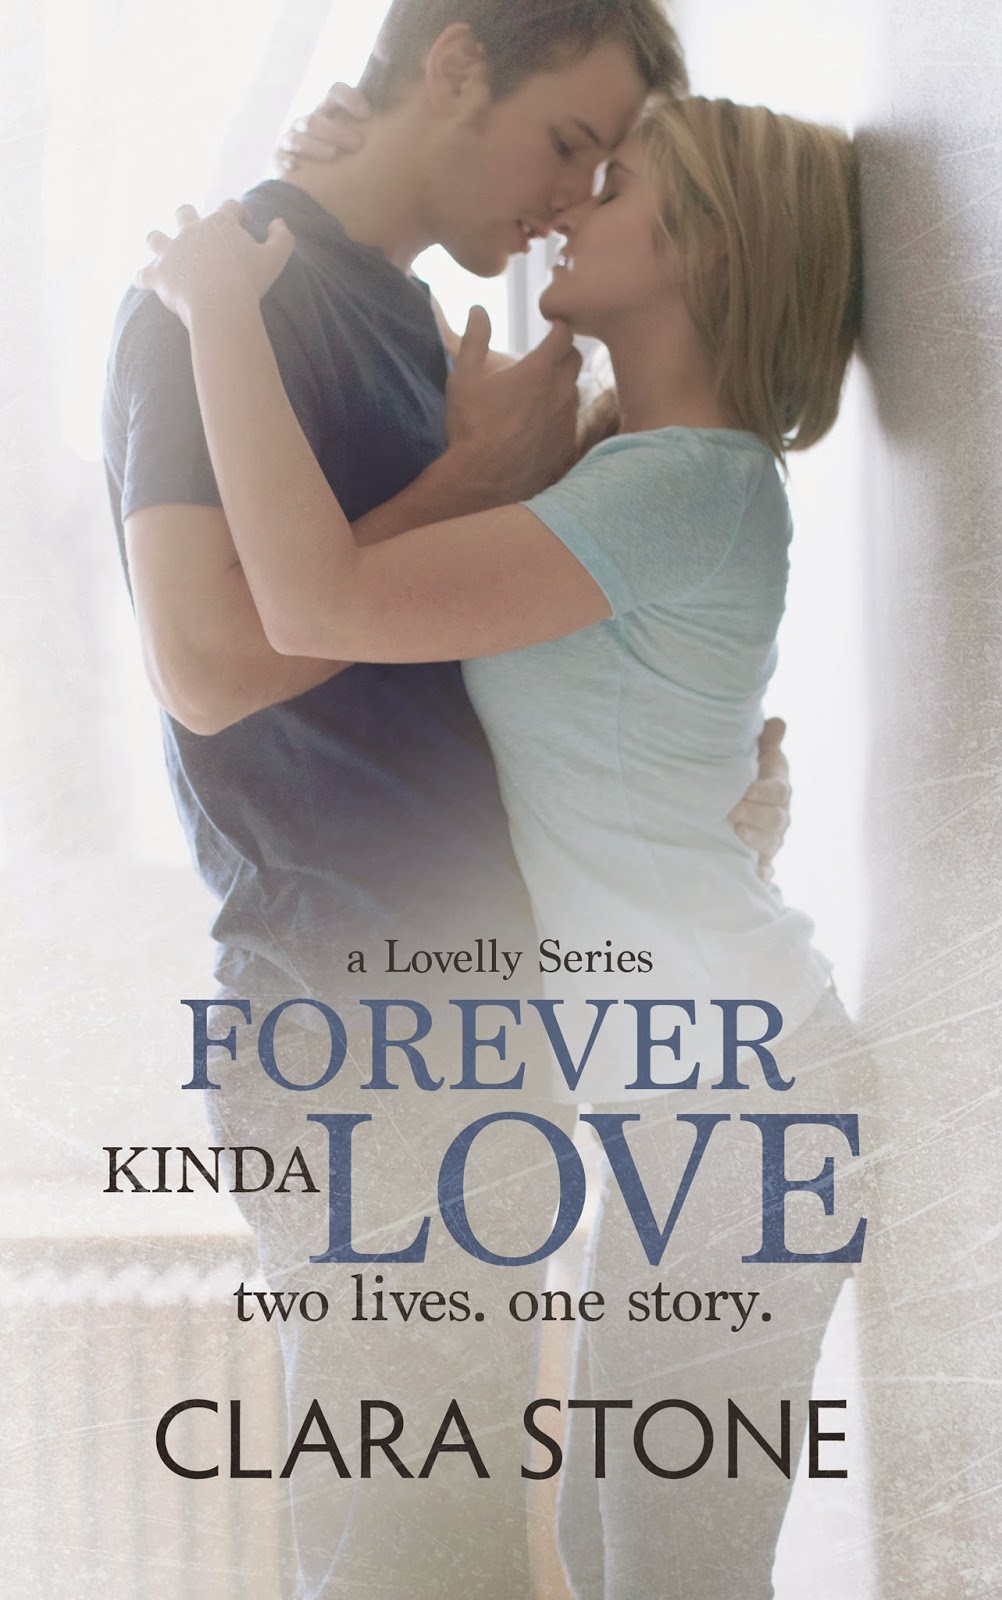 Love Forever? Книга. Kinda Love. Любовь живет вечно книга. Love me series